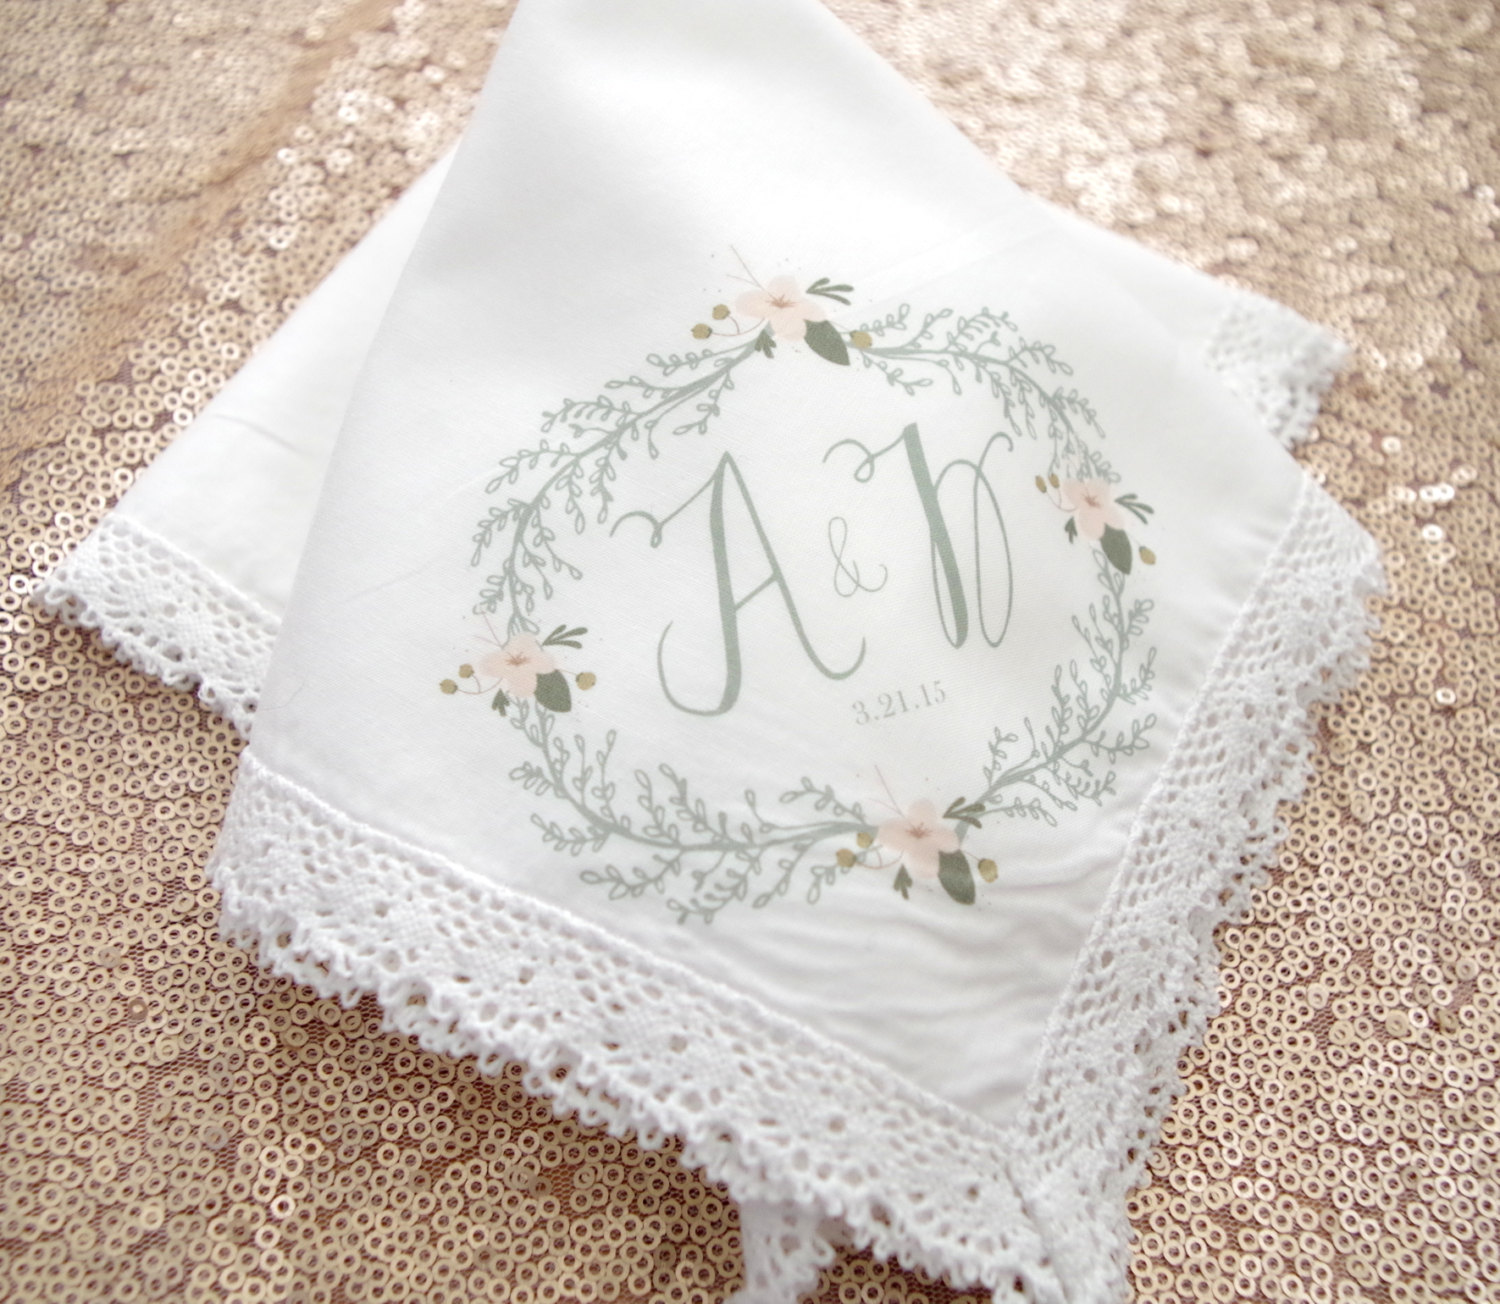 gorgeous floral monogram handkerchief | personalized wedding handkerchiefs and wedding hankies | https://emmalinebride.com/gifts/personalized-wedding-handkerchiefs/